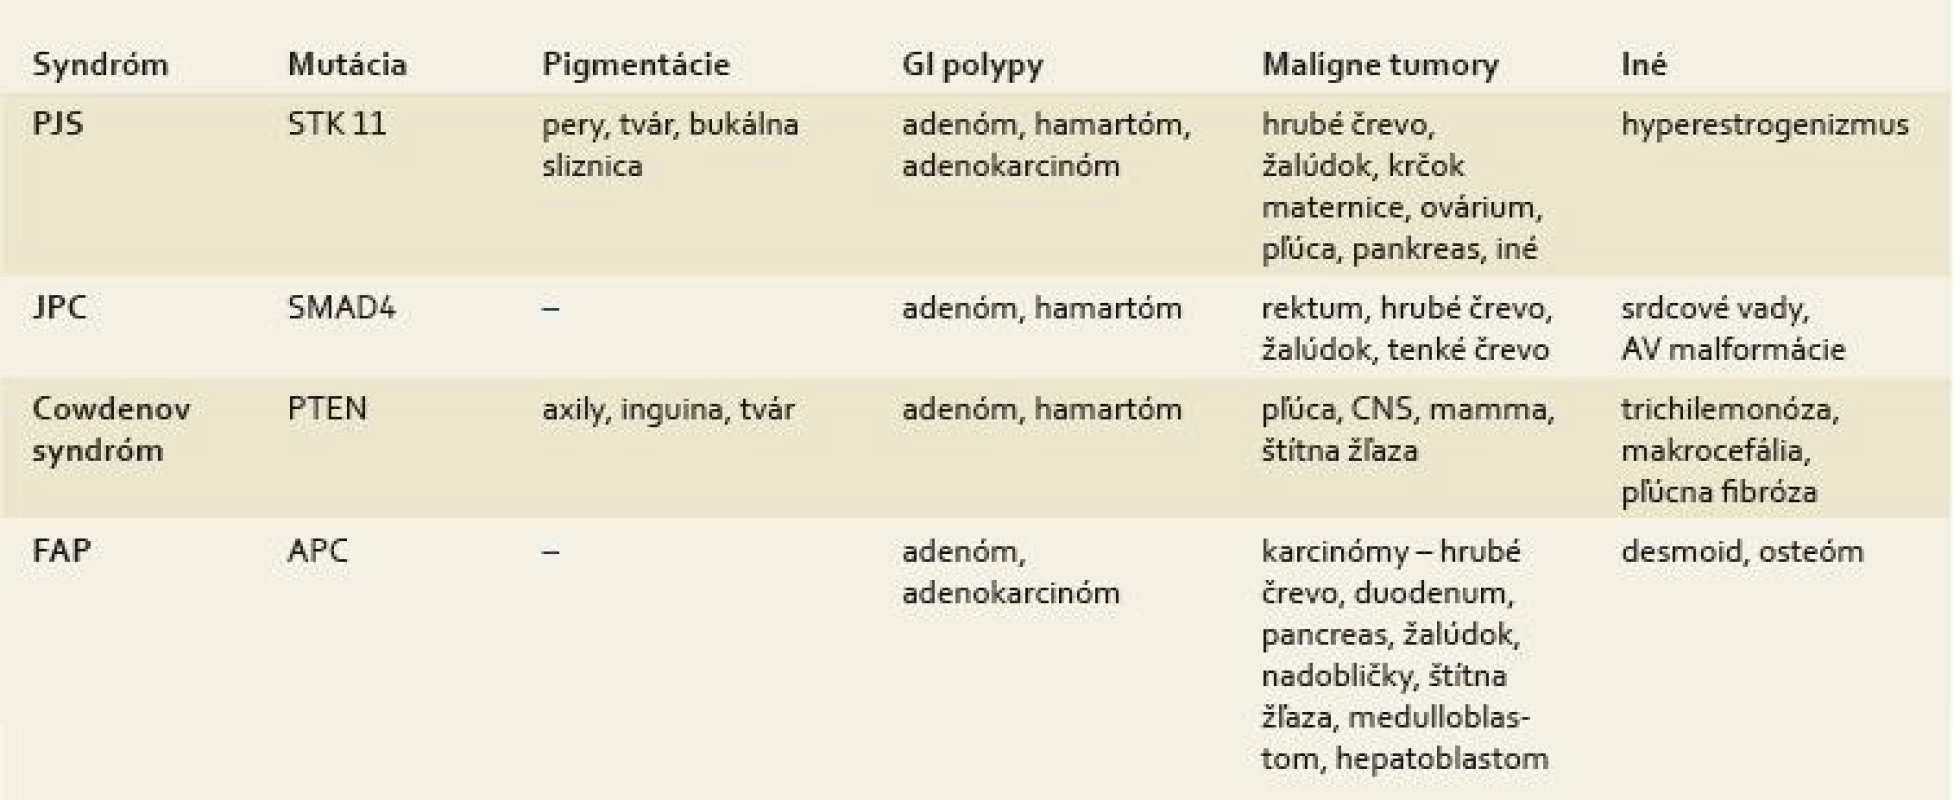 Diferenciálna diagnostika familiárnych polypóz tráviaceho traktu [32–33].
Tab. 2. Differential diagnostics of familial polyposis of the digestive tract [32–33].